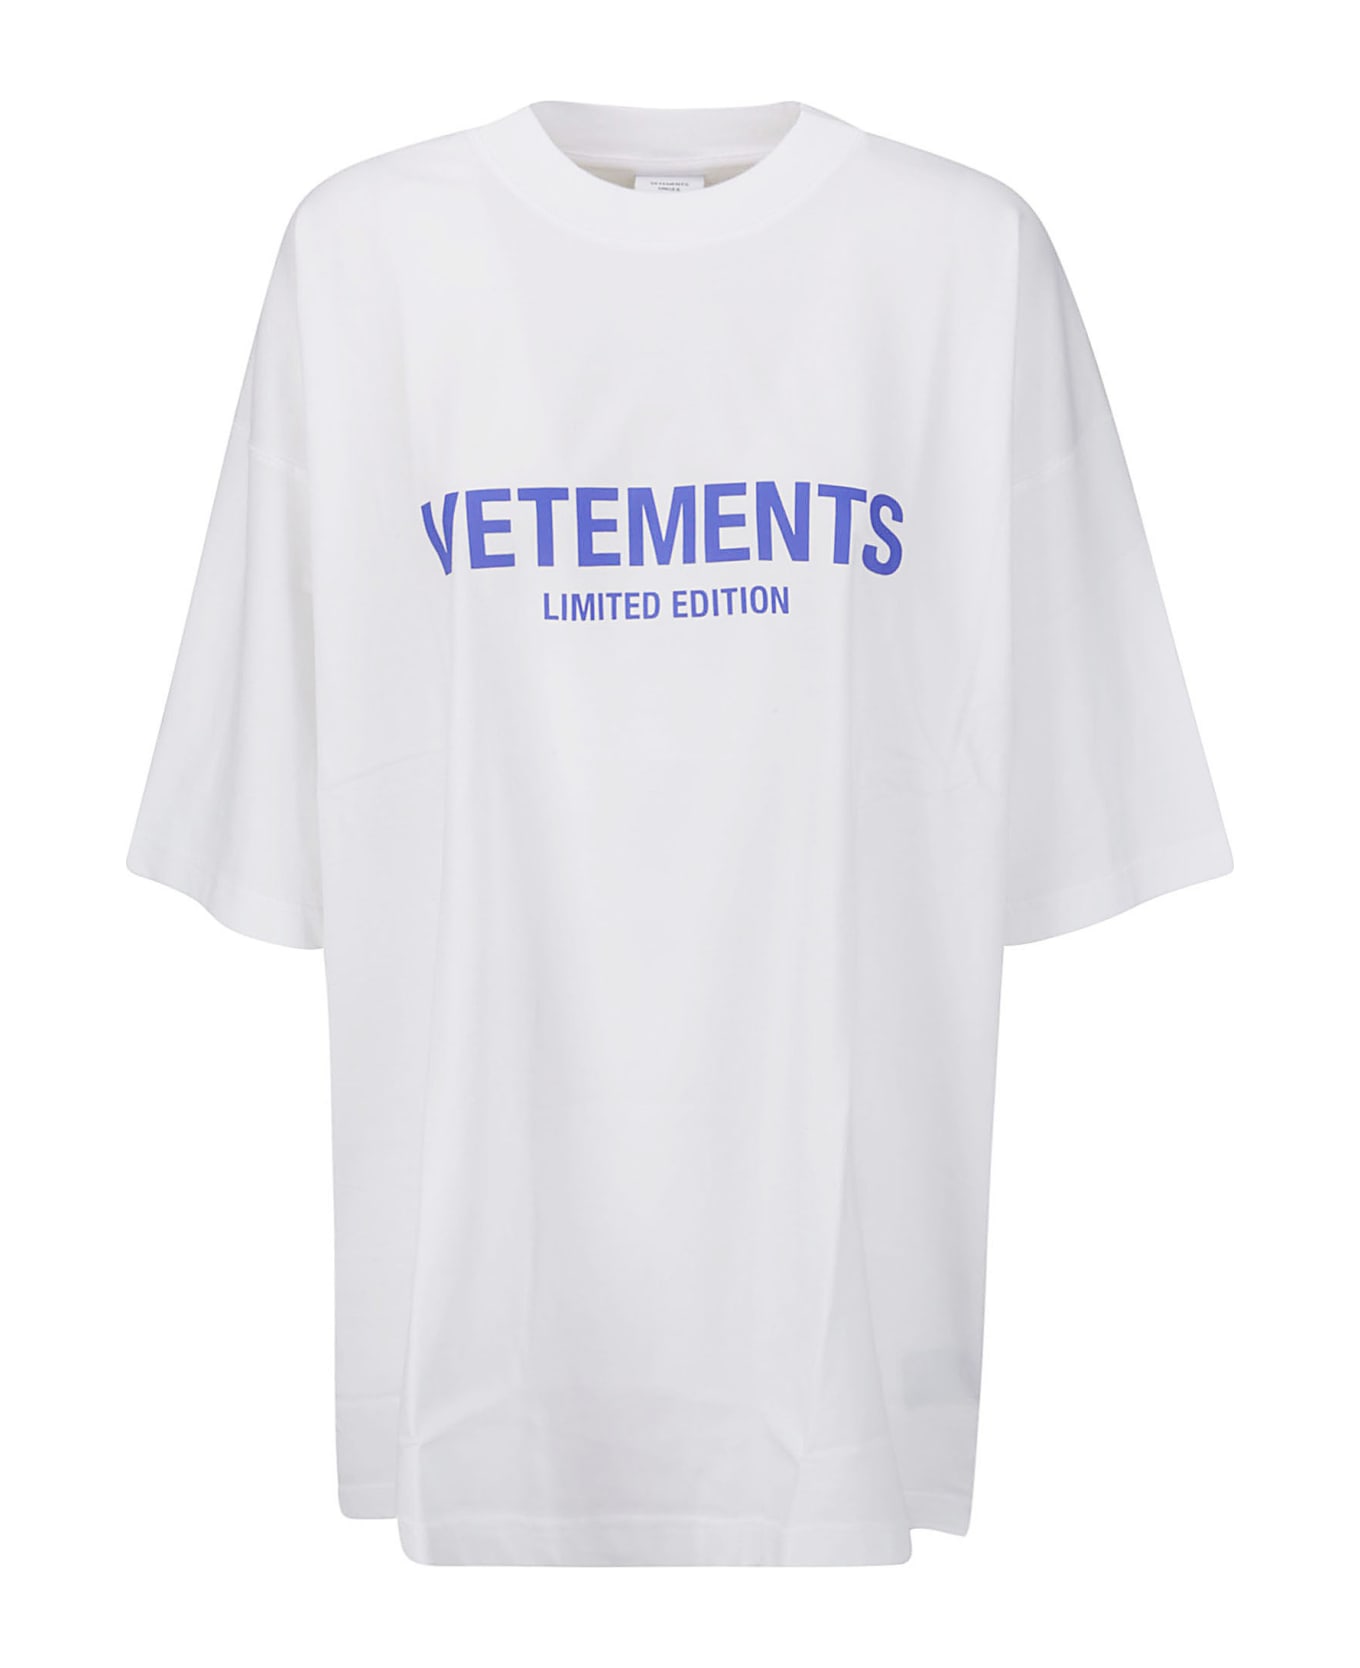 VETEMENTS Limited Edition Logo T-shirt - WHITE / BLUE